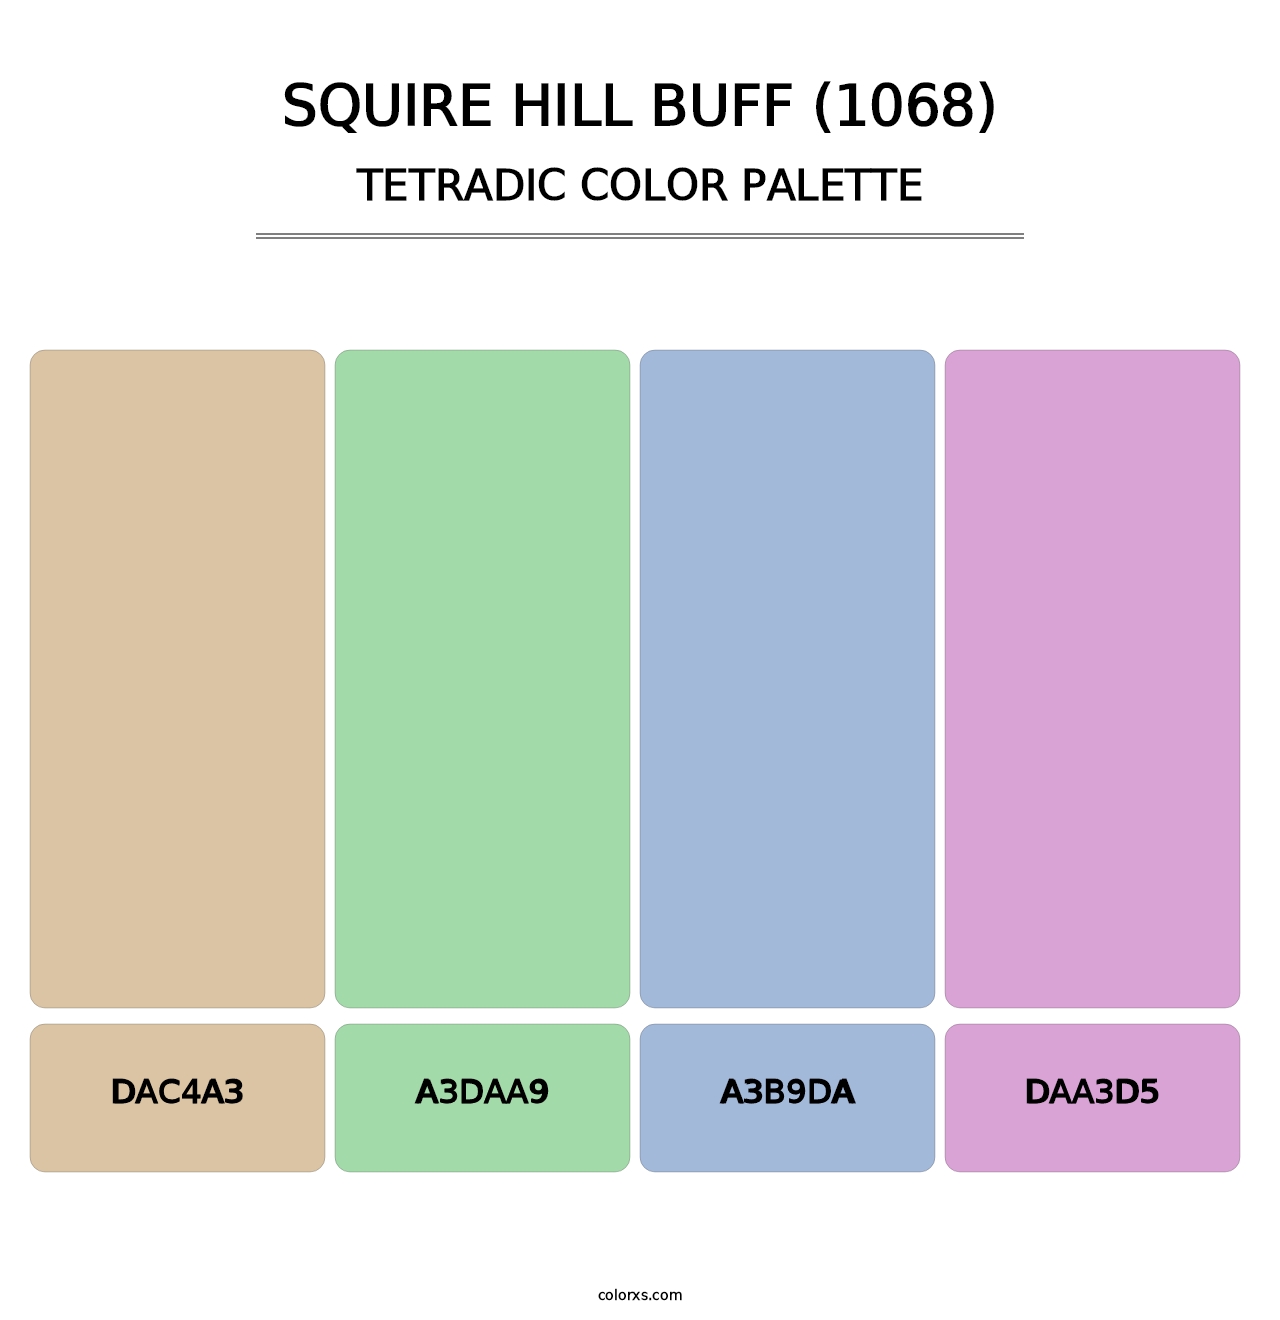 Squire Hill Buff (1068) - Tetradic Color Palette